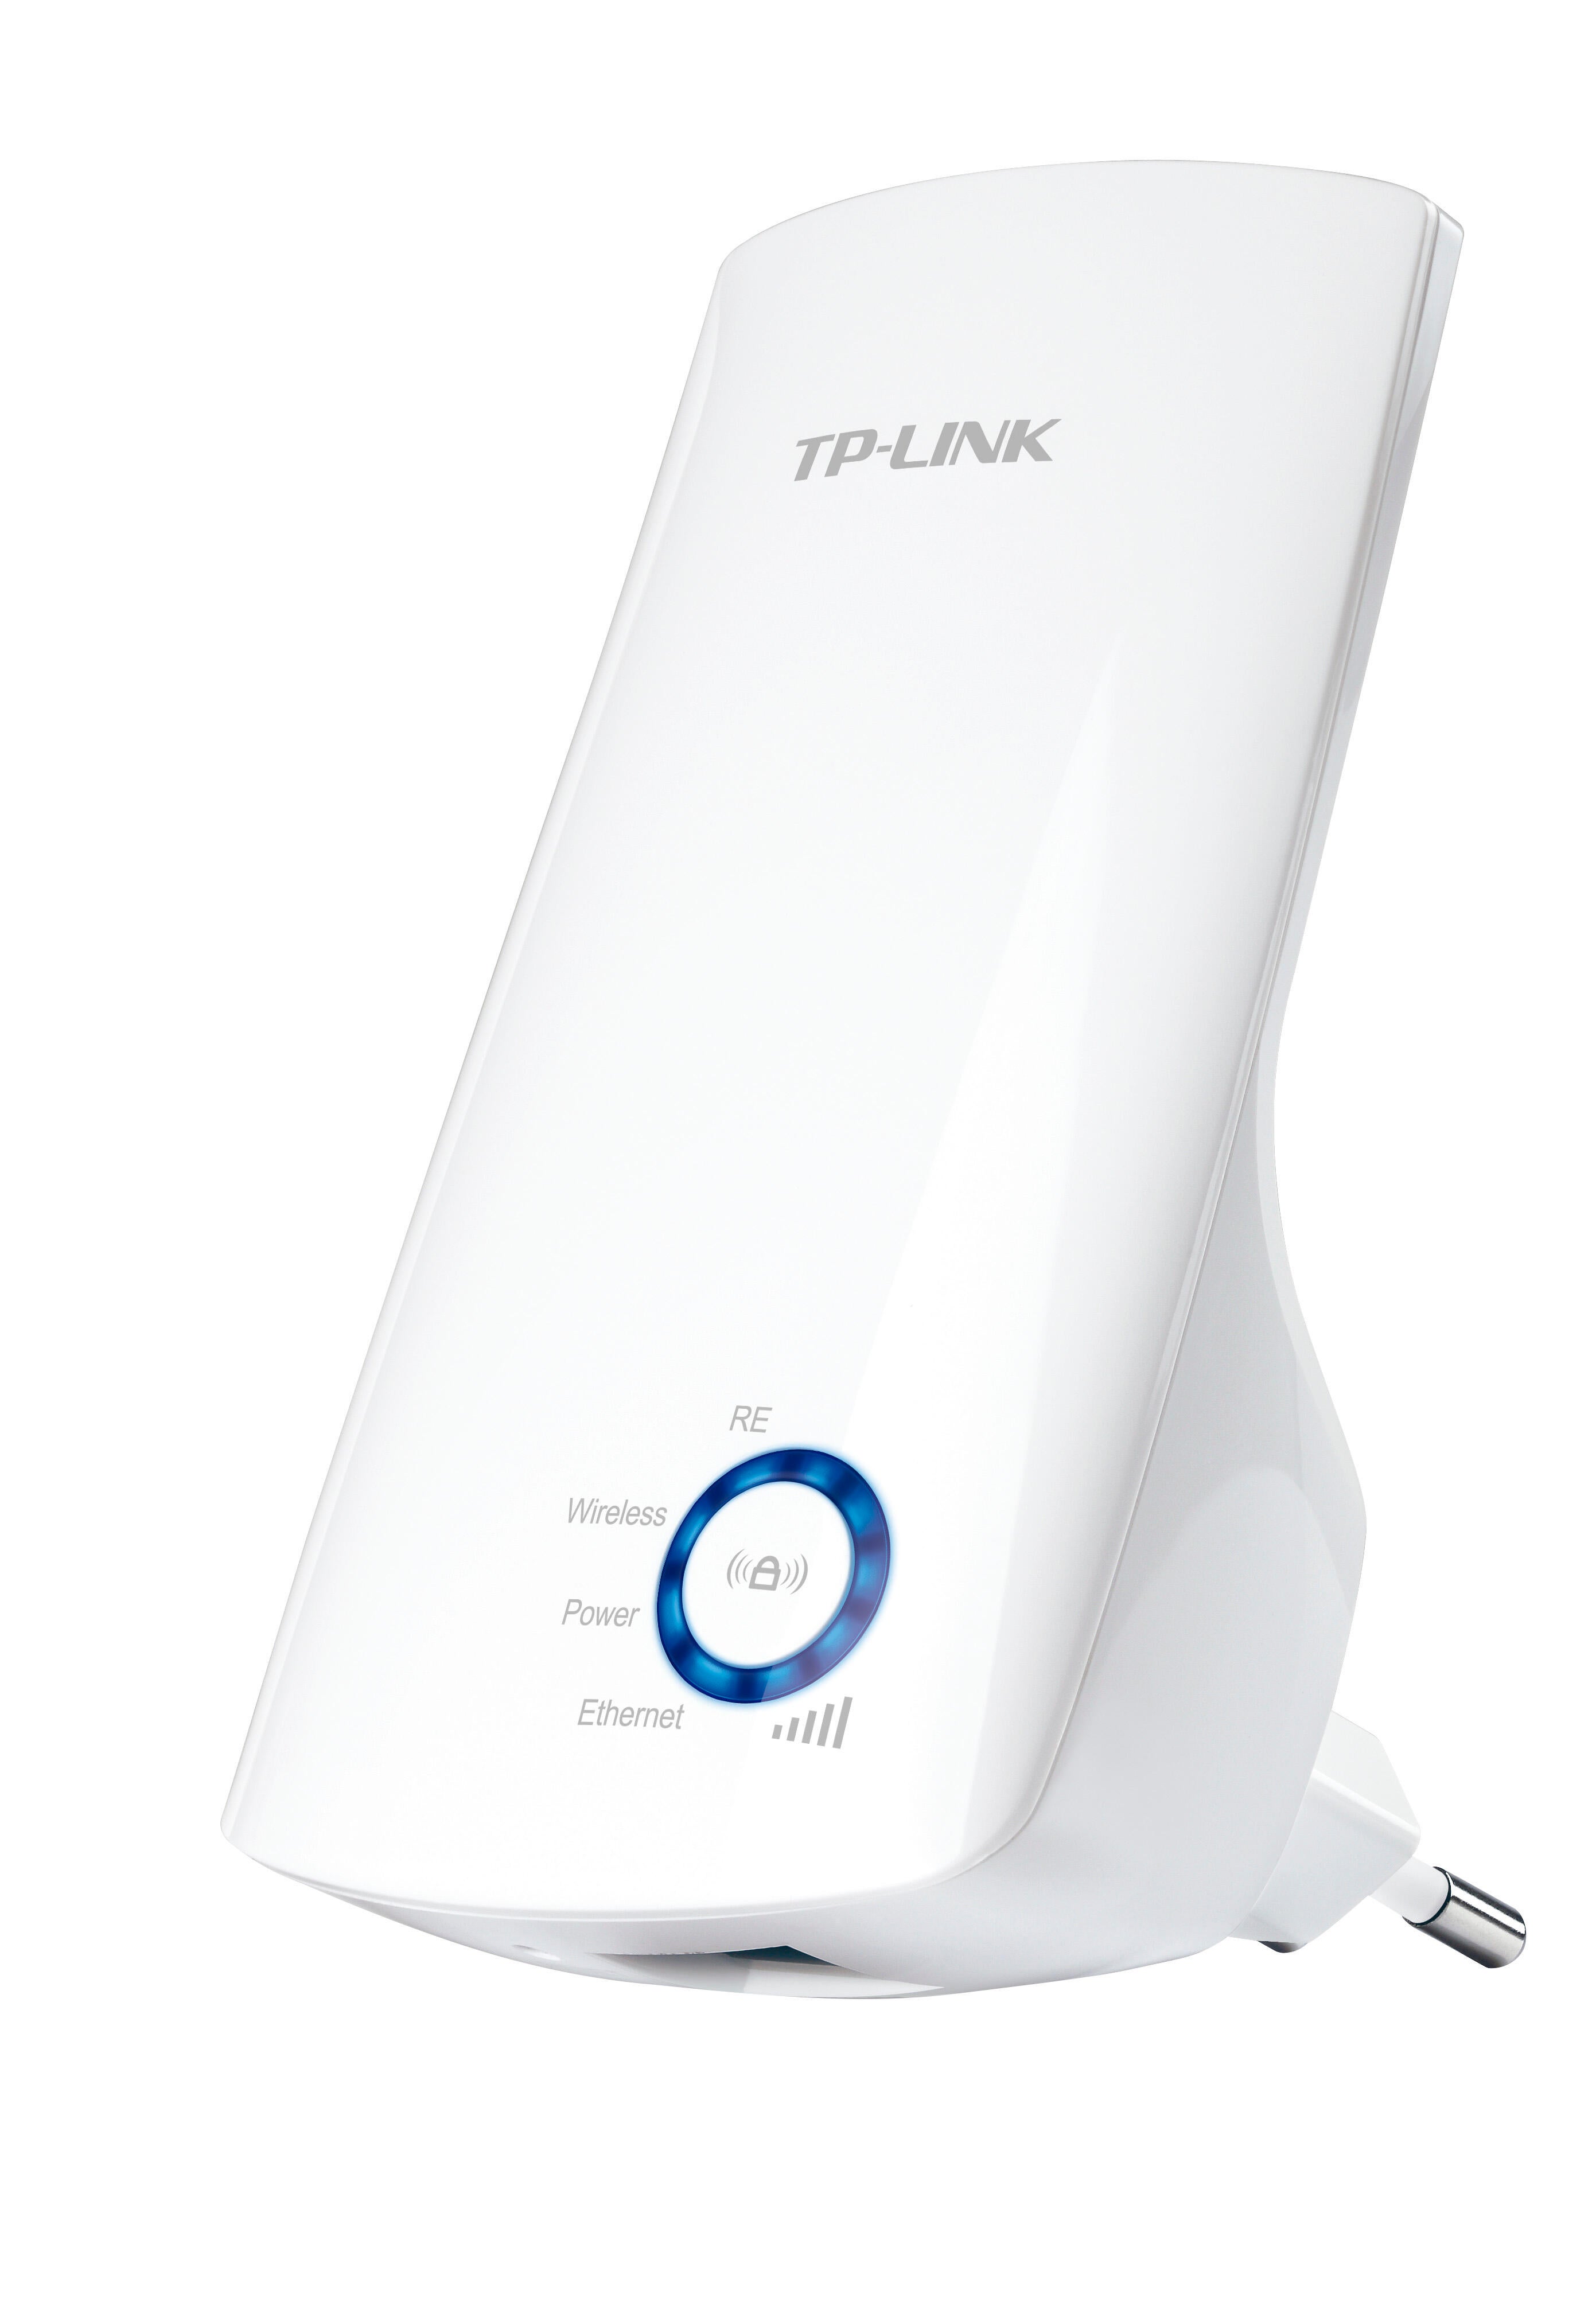 telar Retirada incluir Repetidor WiFi TP-LINK TL-WA850RE | Leroy Merlin